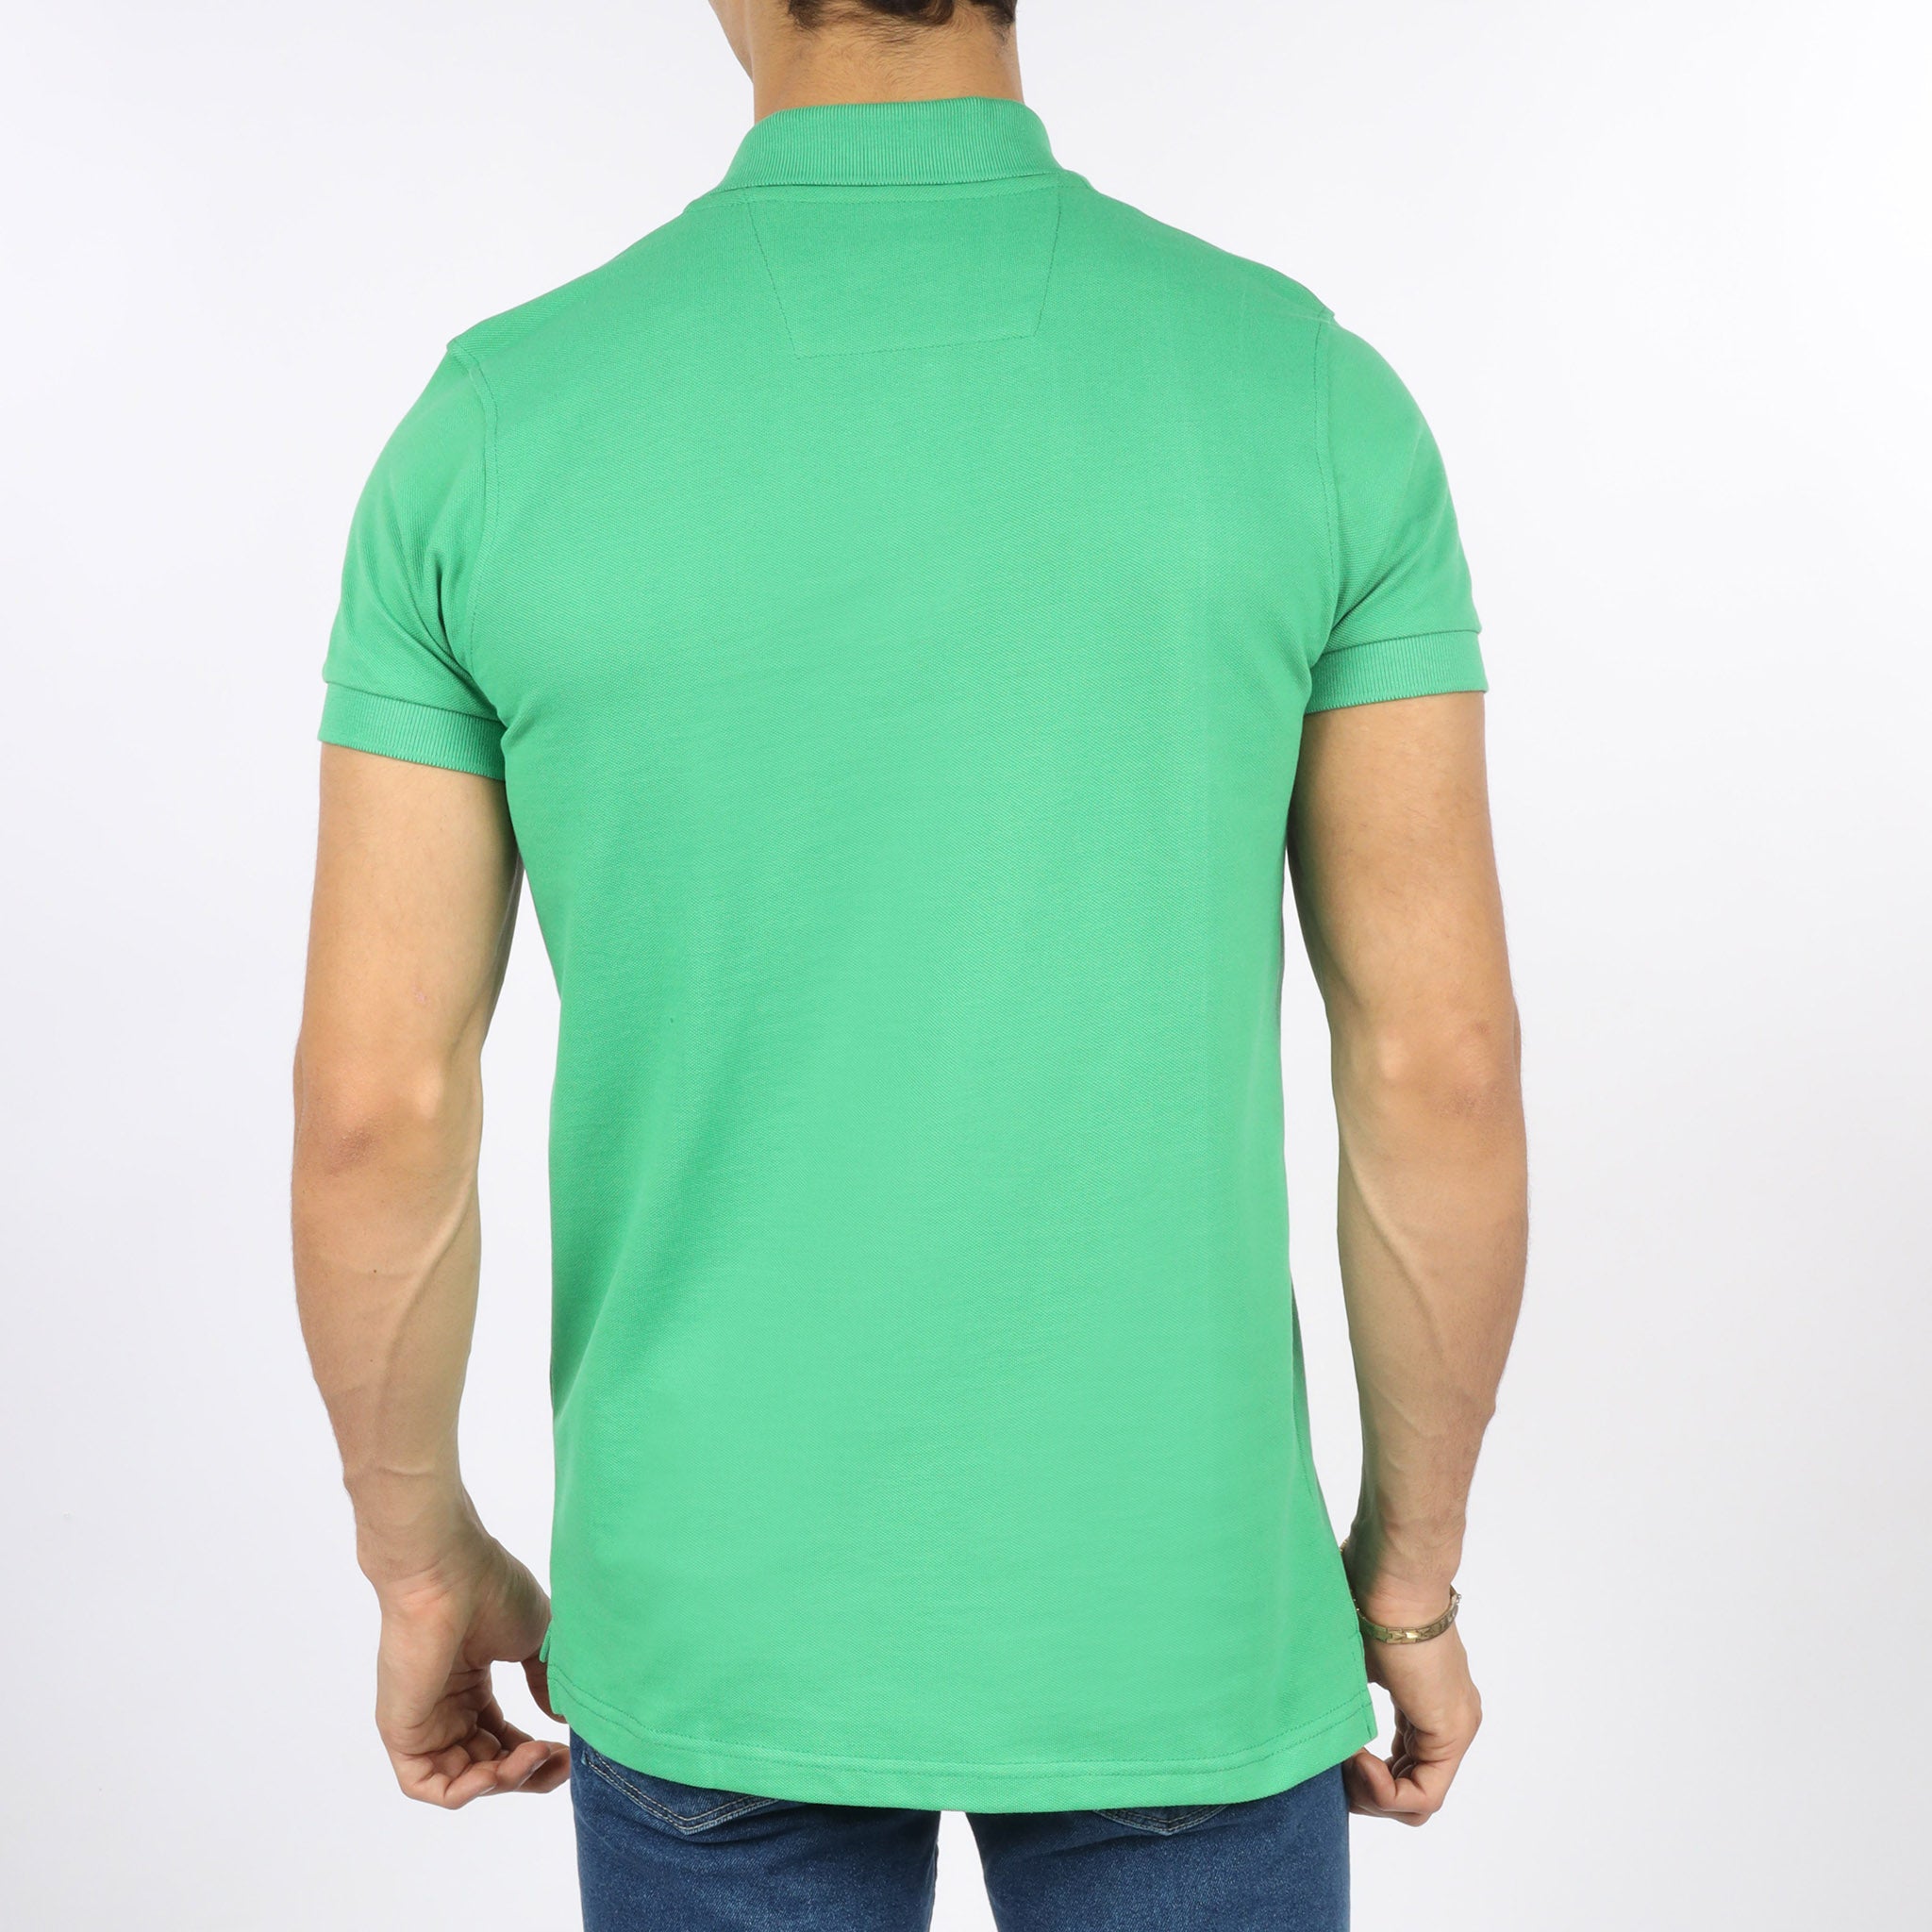 Vote-polo t-shirt- green